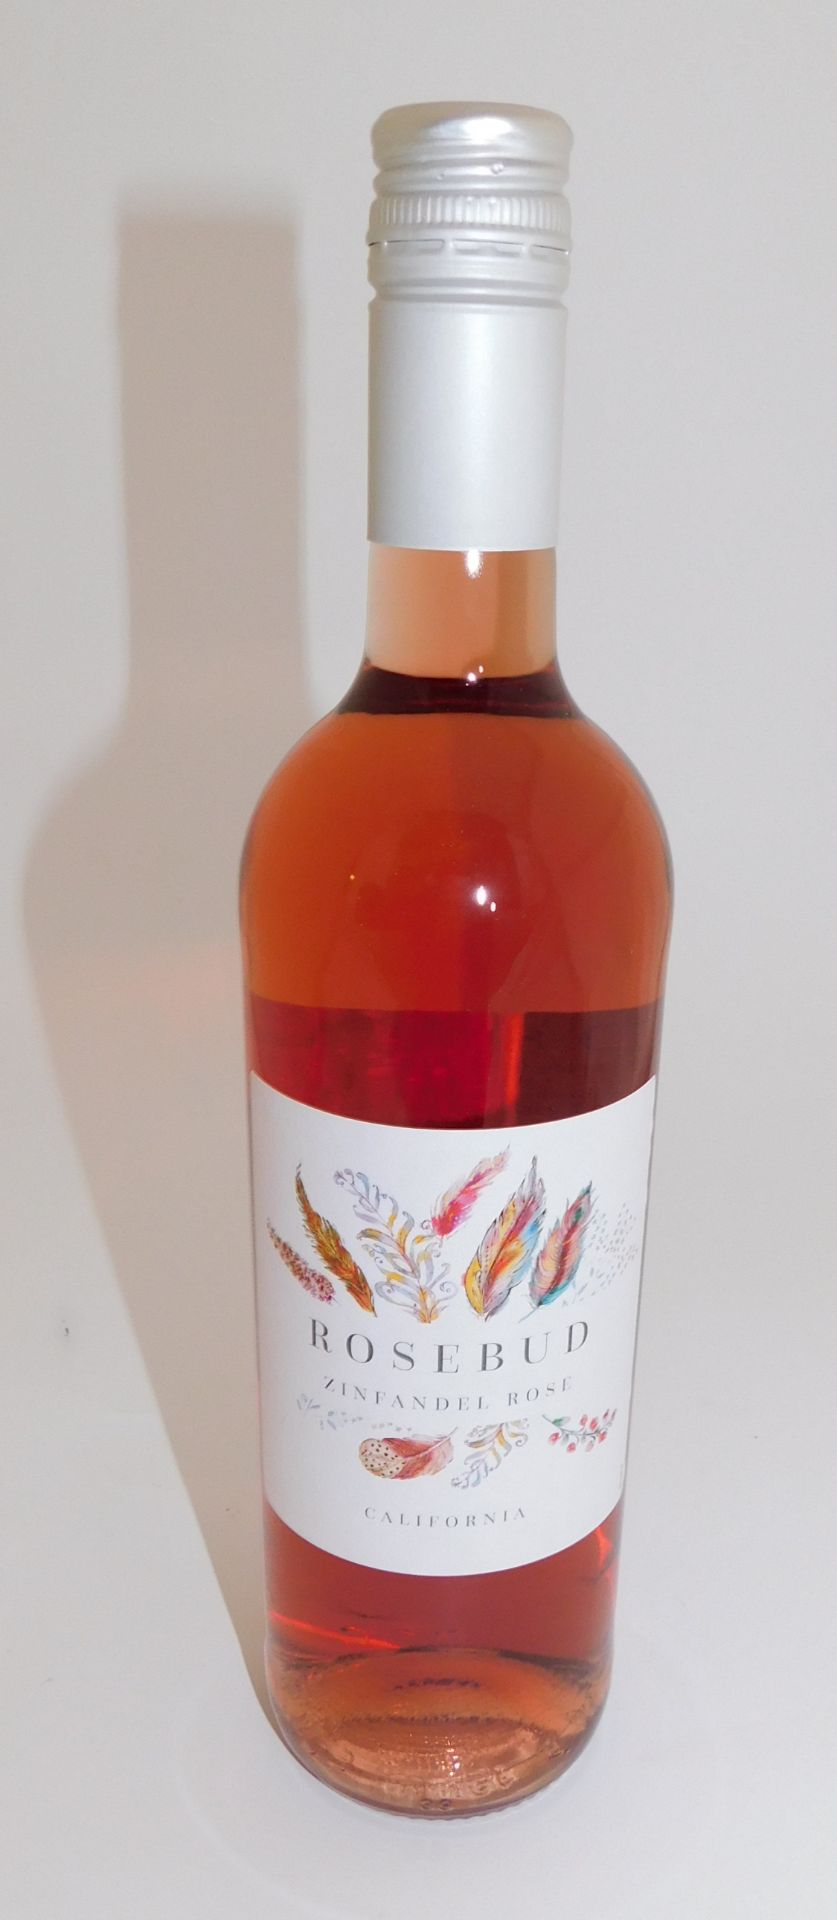 18 Bottles of Rosebud Zinfandel Rose, 750ml (Located Stockport – See General Notes for More